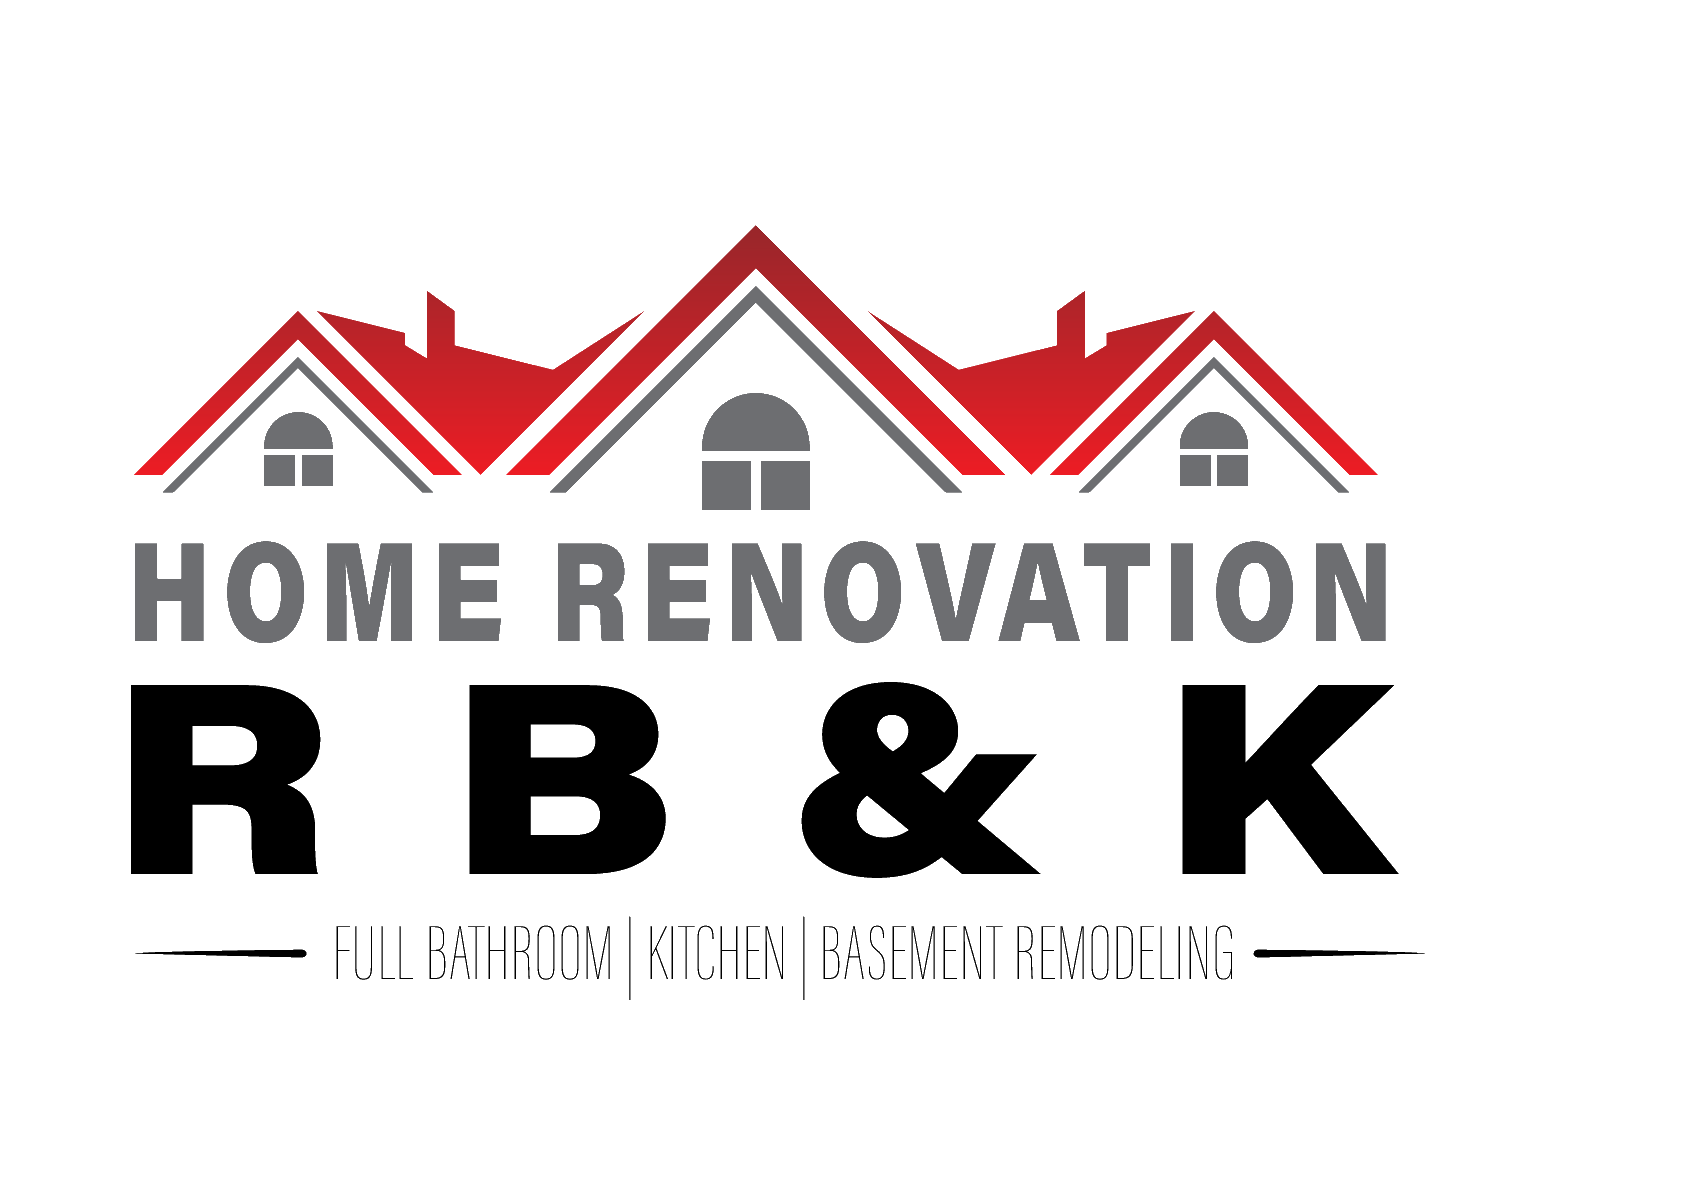 RBK Renovation